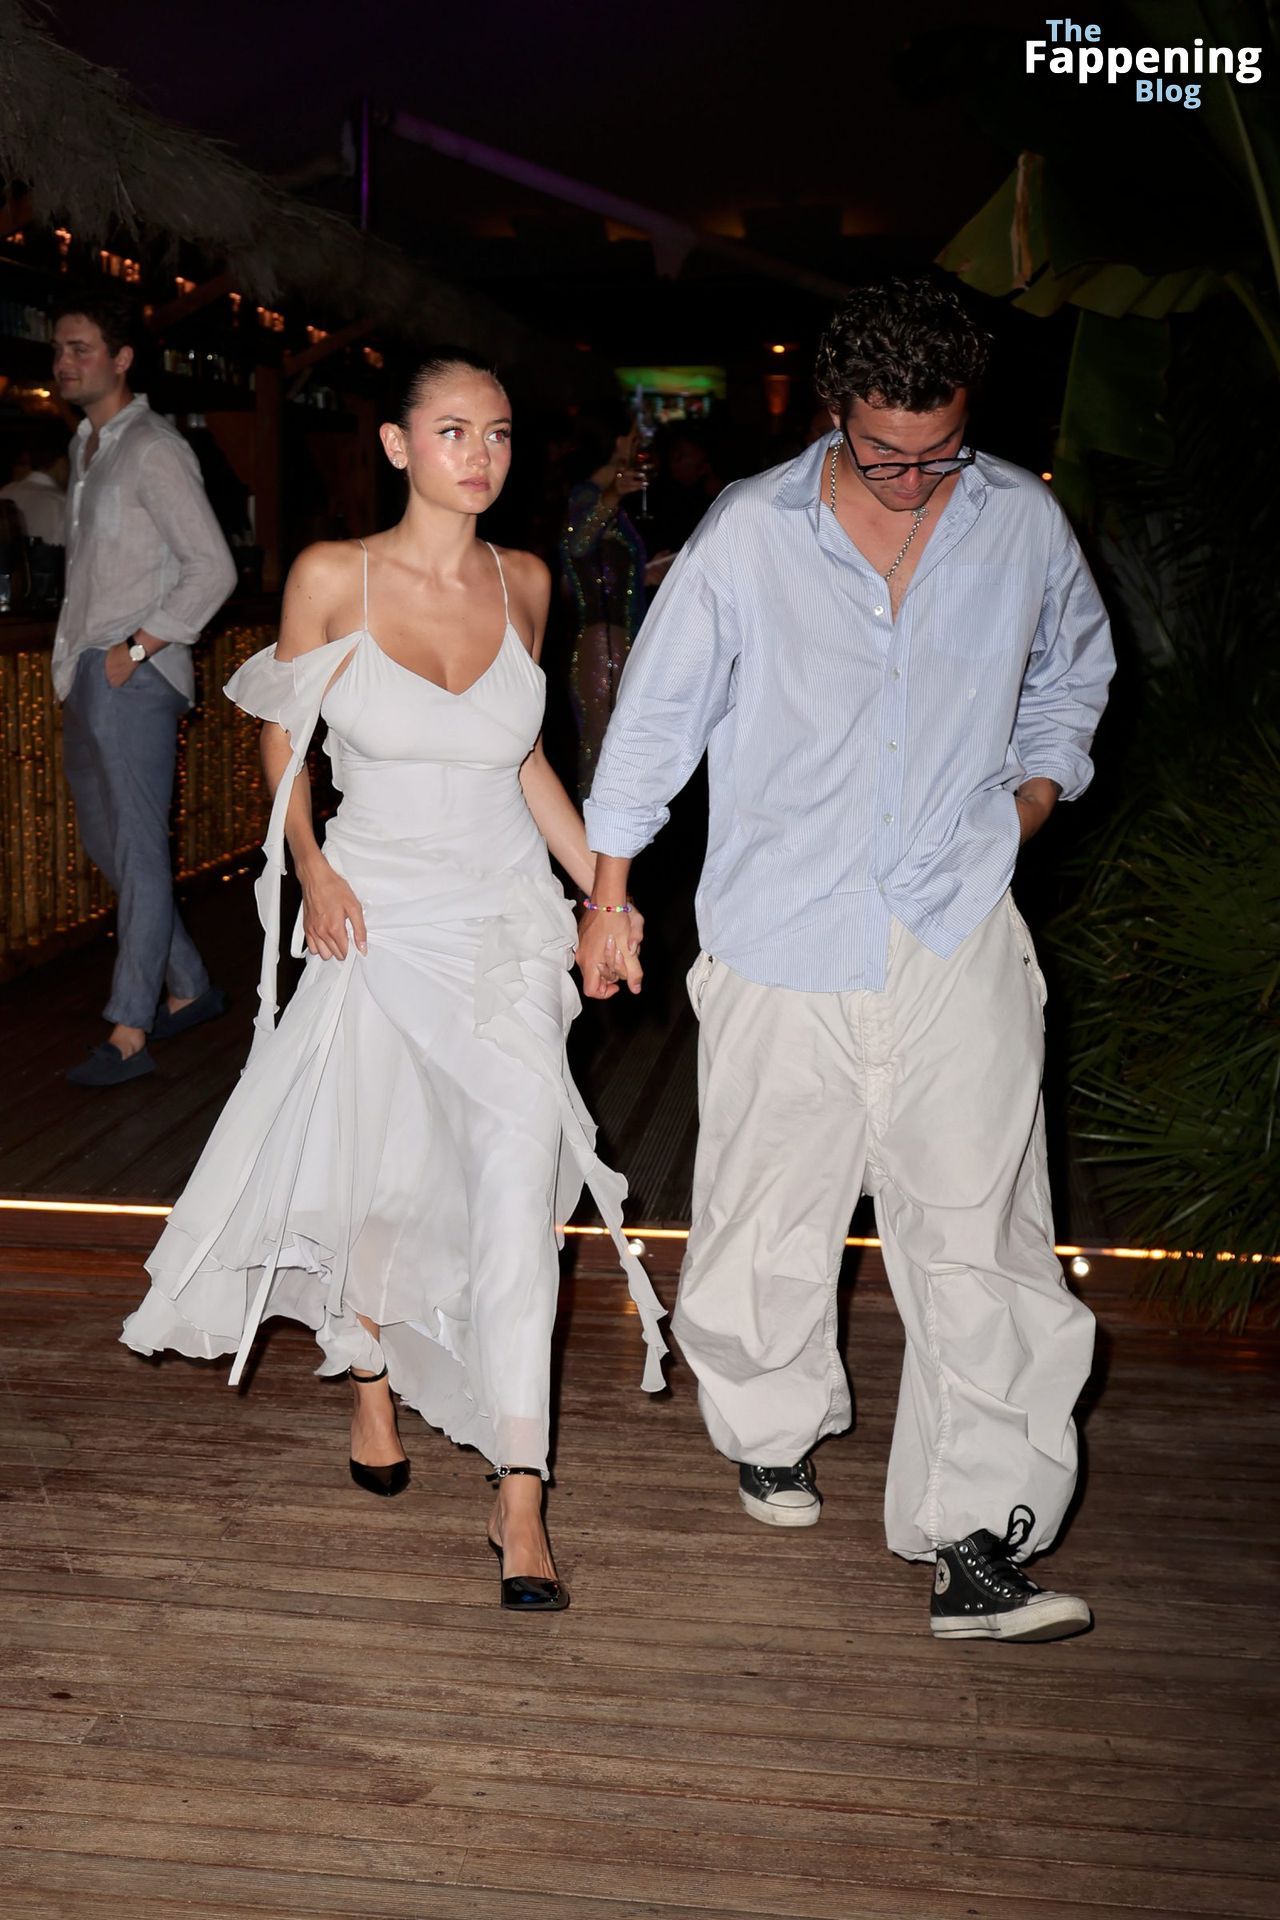 Leni Klum Stuns in a White Dress at Flavio Briatore’s Party (29 Photos)